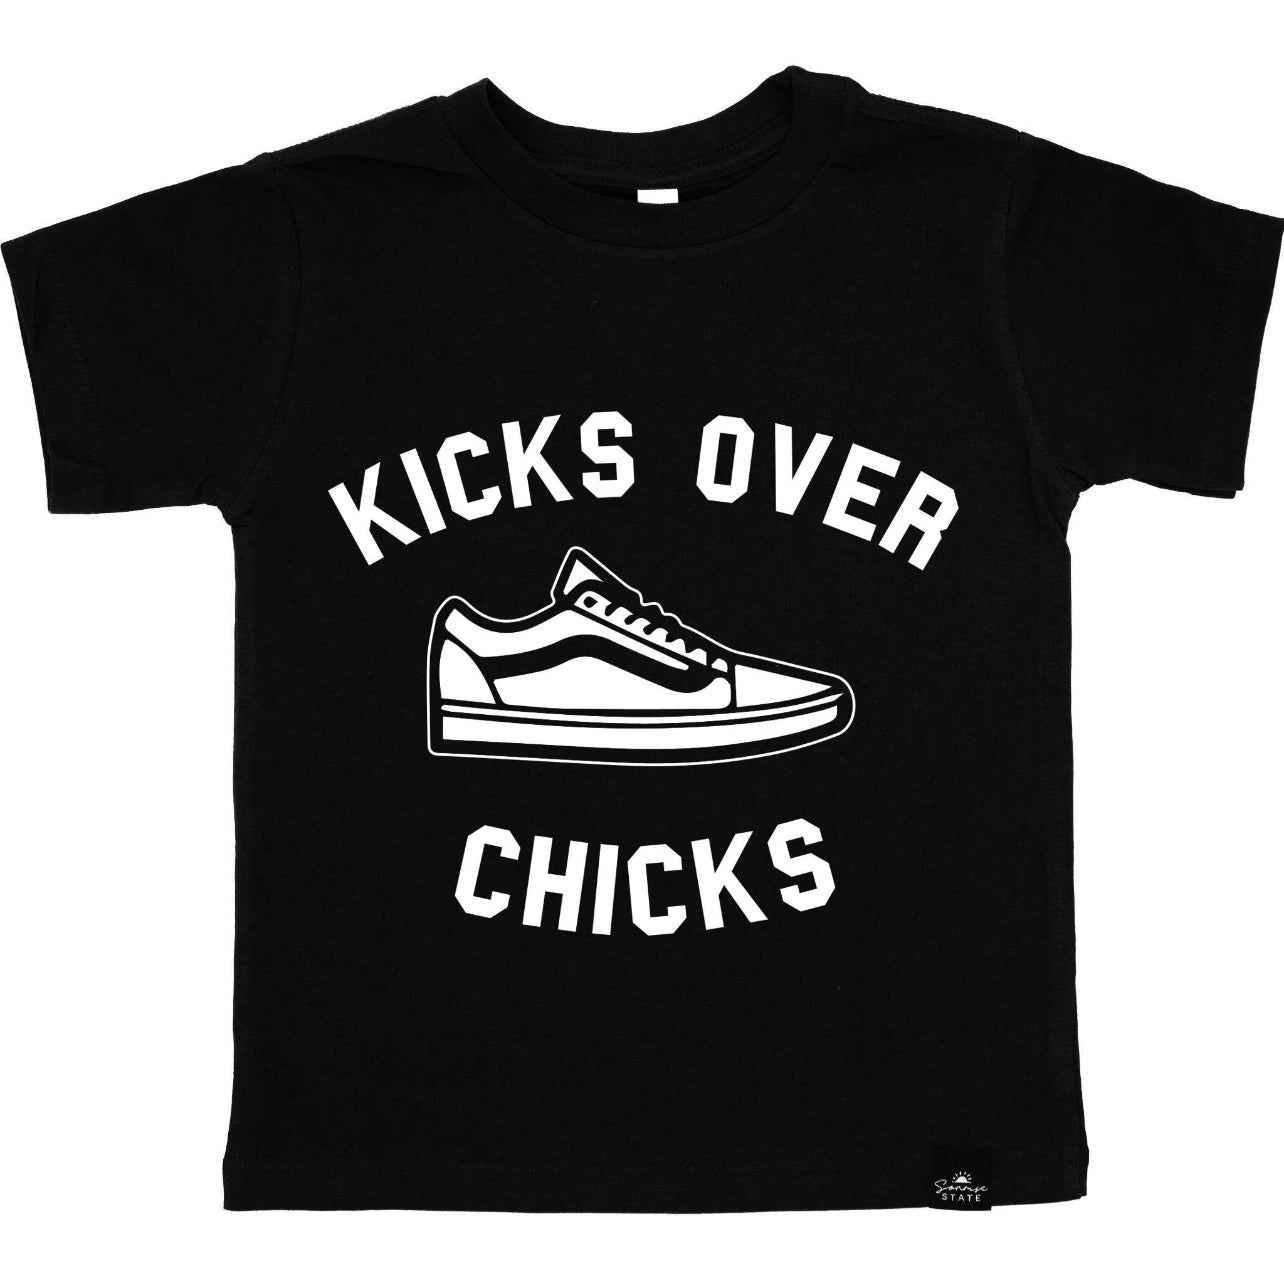 Kicks over chicks tee | black